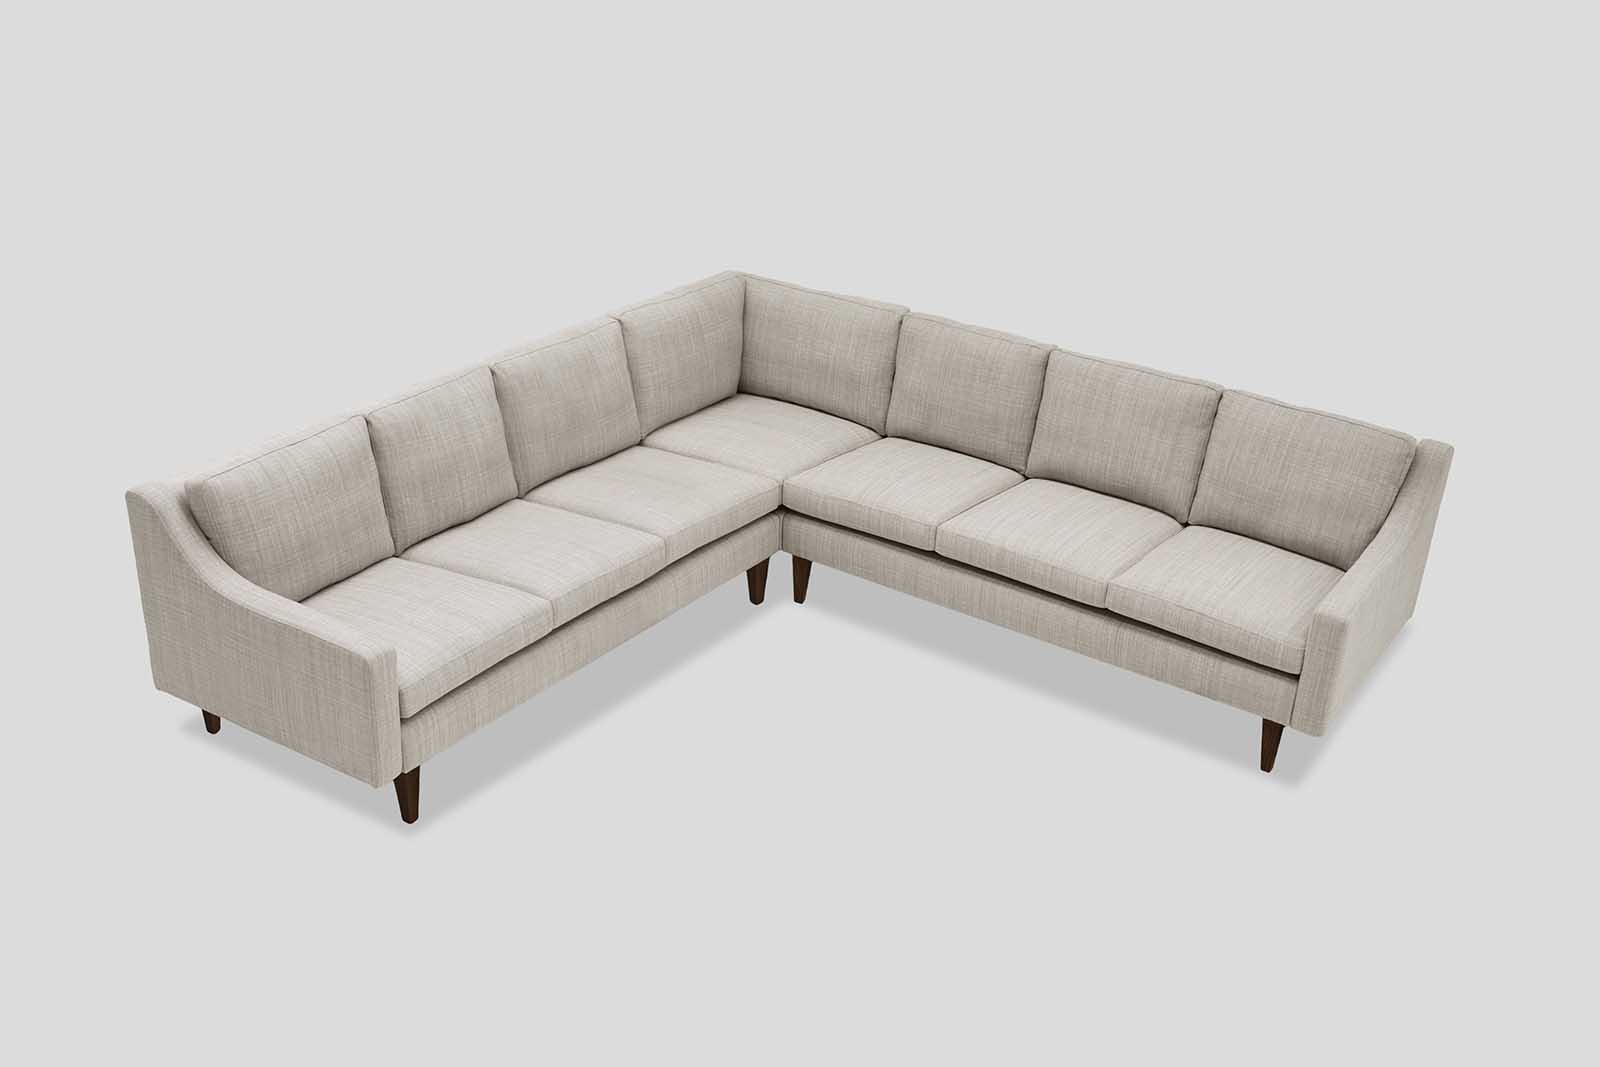 HB02-large-corner-sofa-coconut-3x3-overhead-treacle